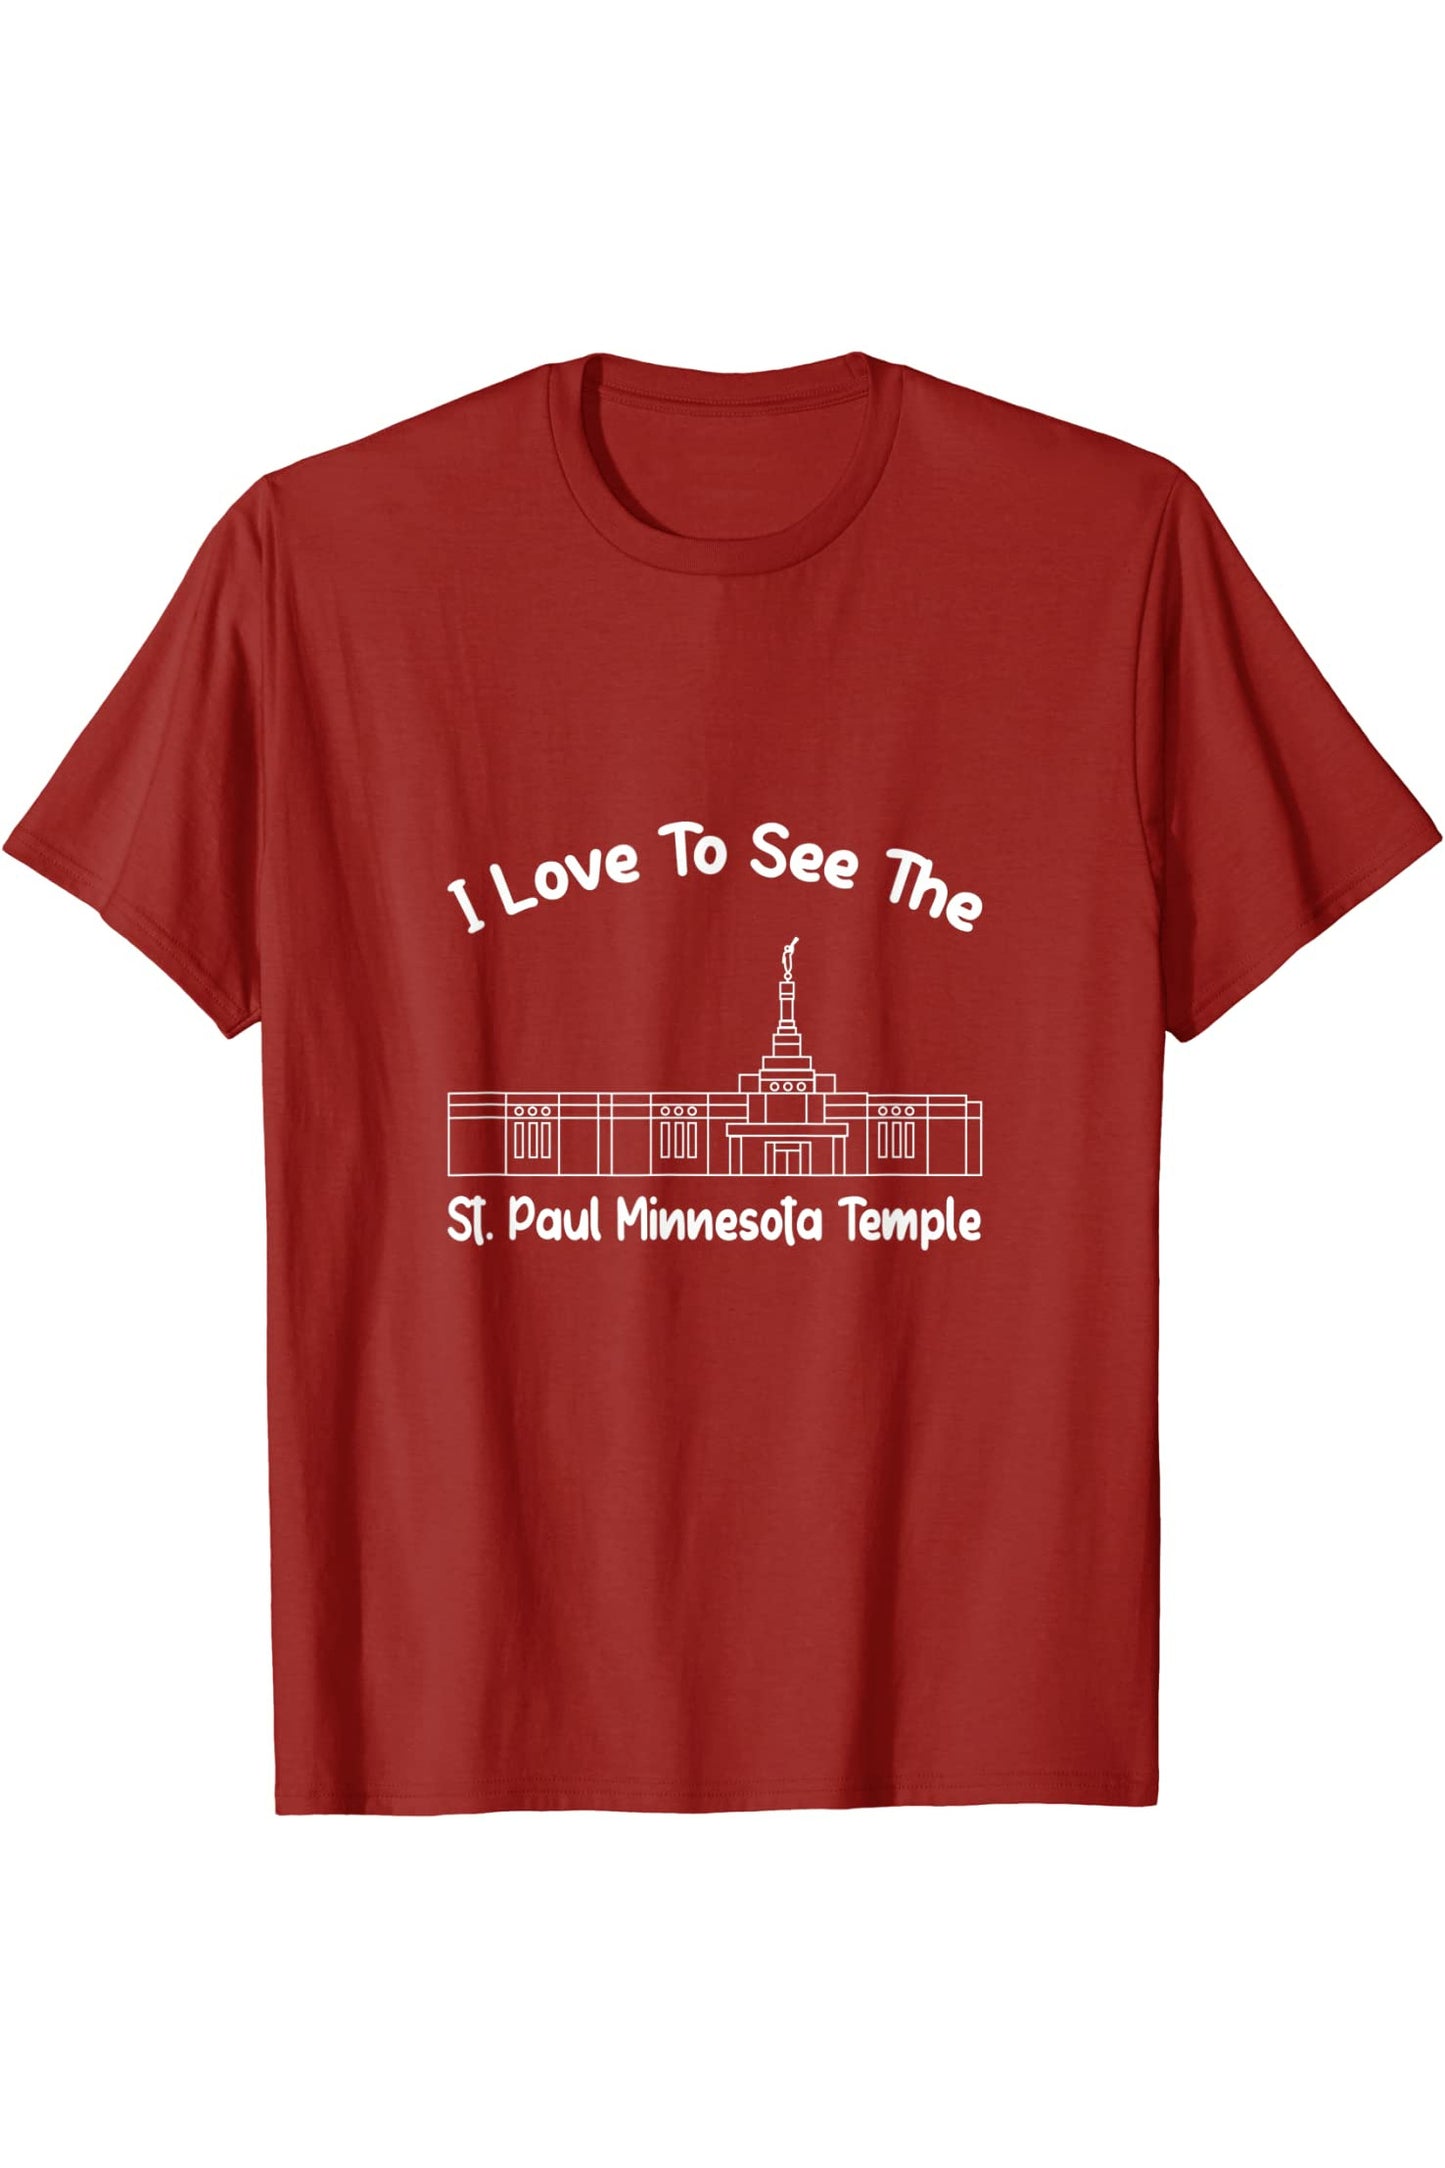 St Paul Minnesota Temple T-Shirt - Primary Style (English) US